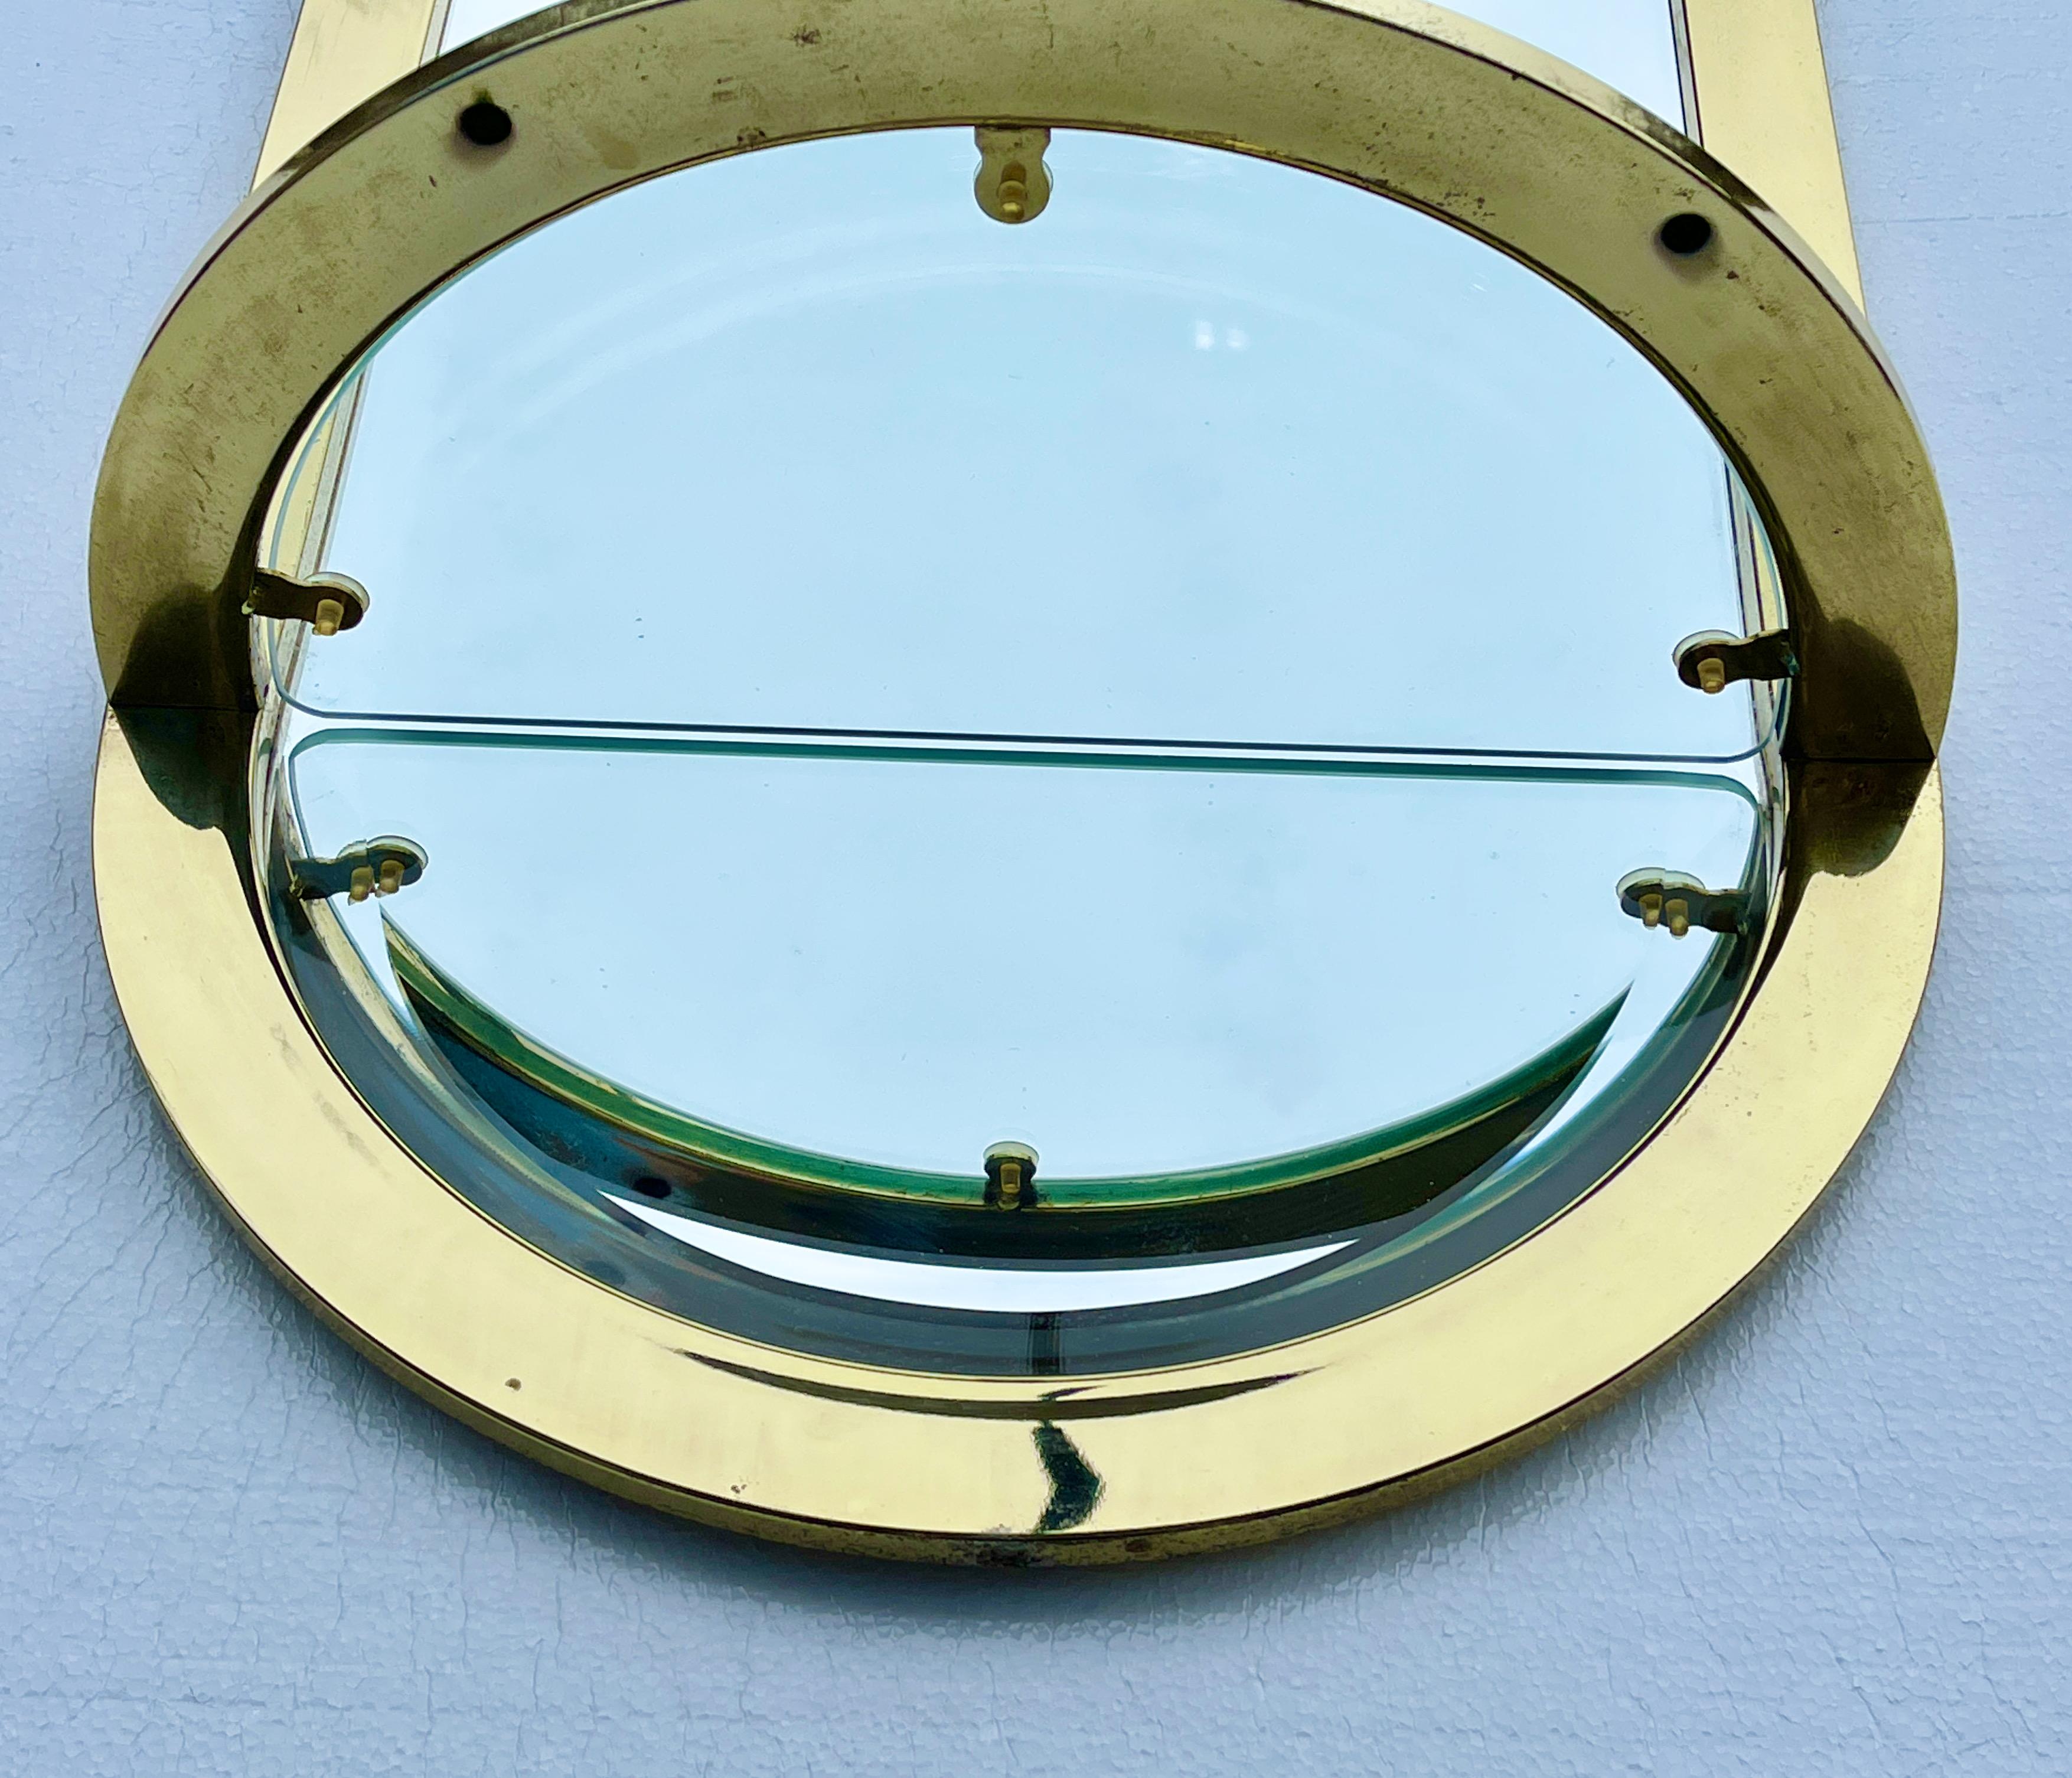 DIA Design Institute America Brass Racetrack Oval Mirror with Demilune Shelf For Sale 8